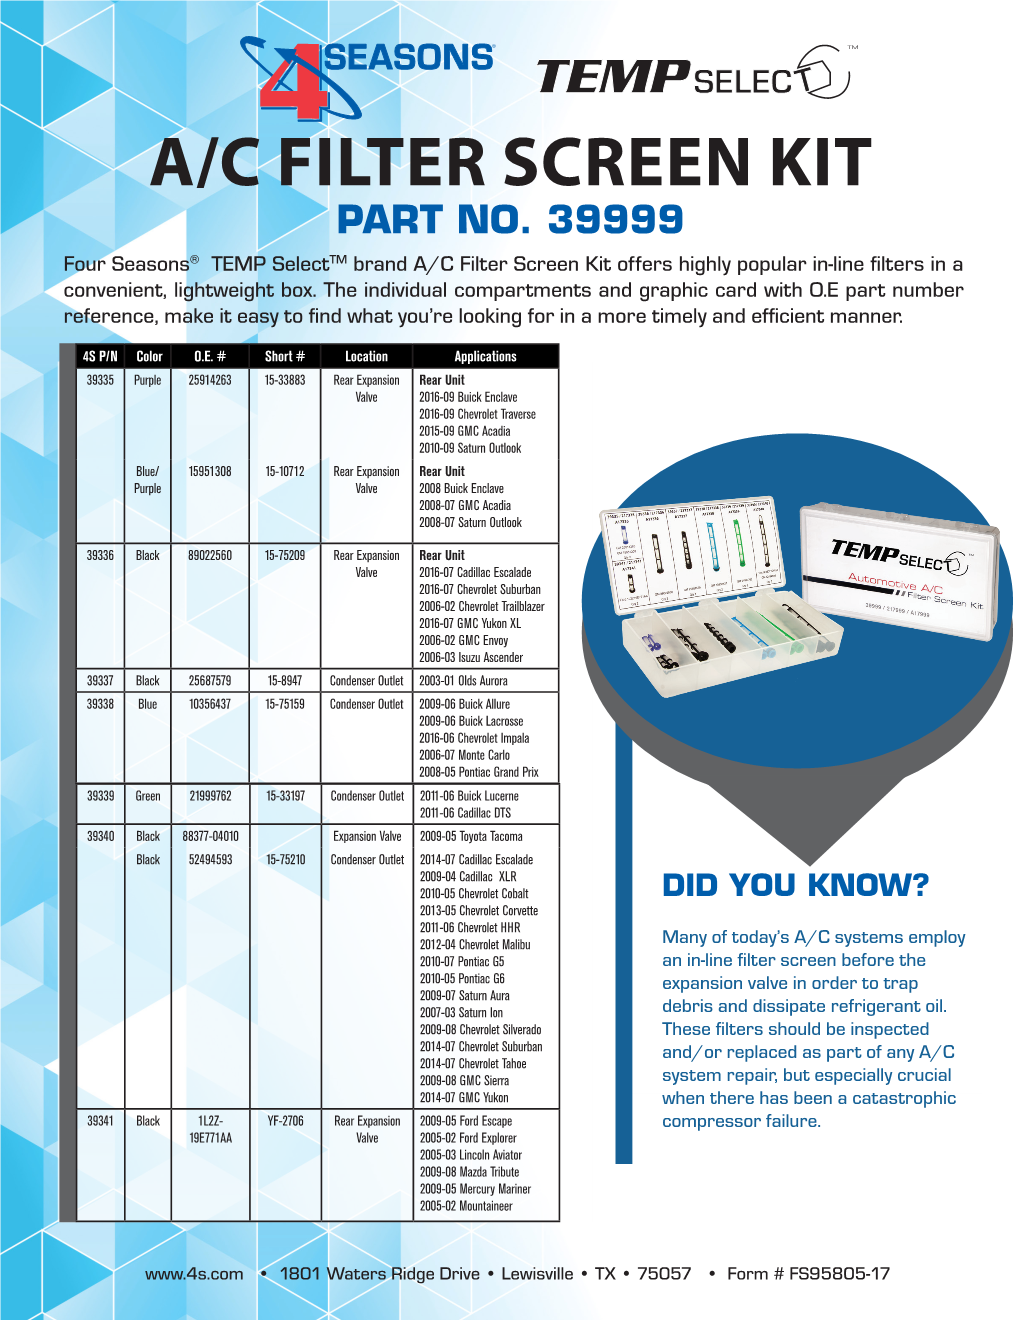 A/C Filter Screen Kit Part No